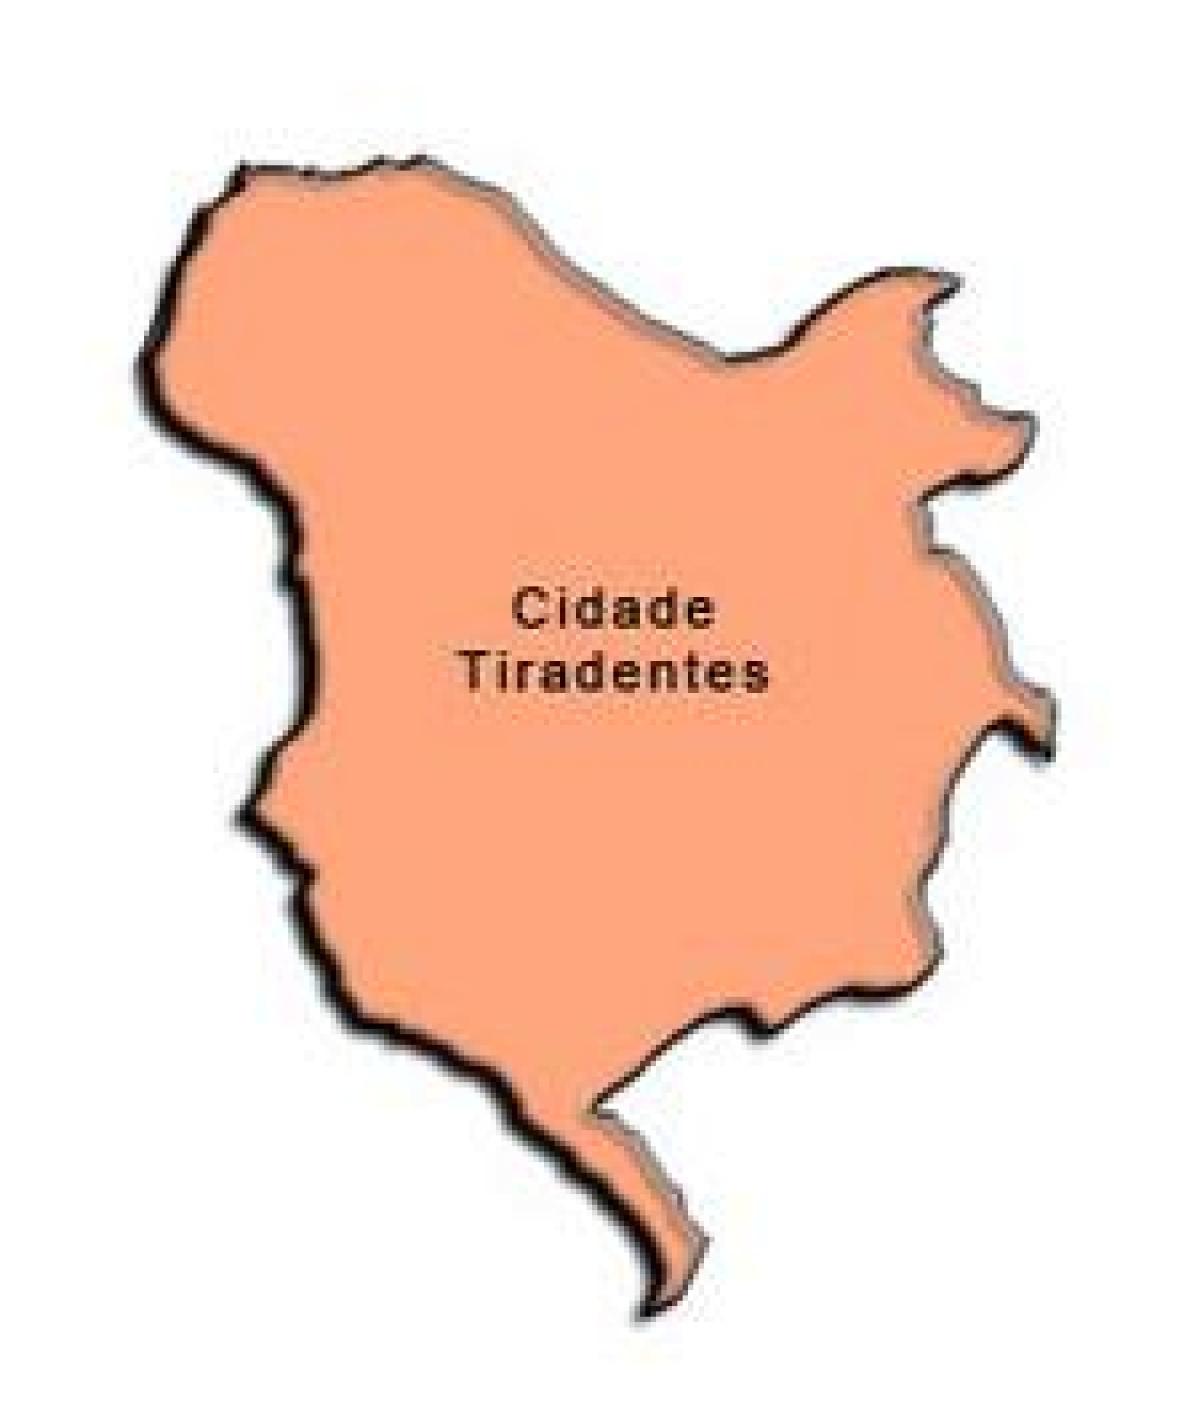 Зураг Cidade Tiradentes дэд prefecture